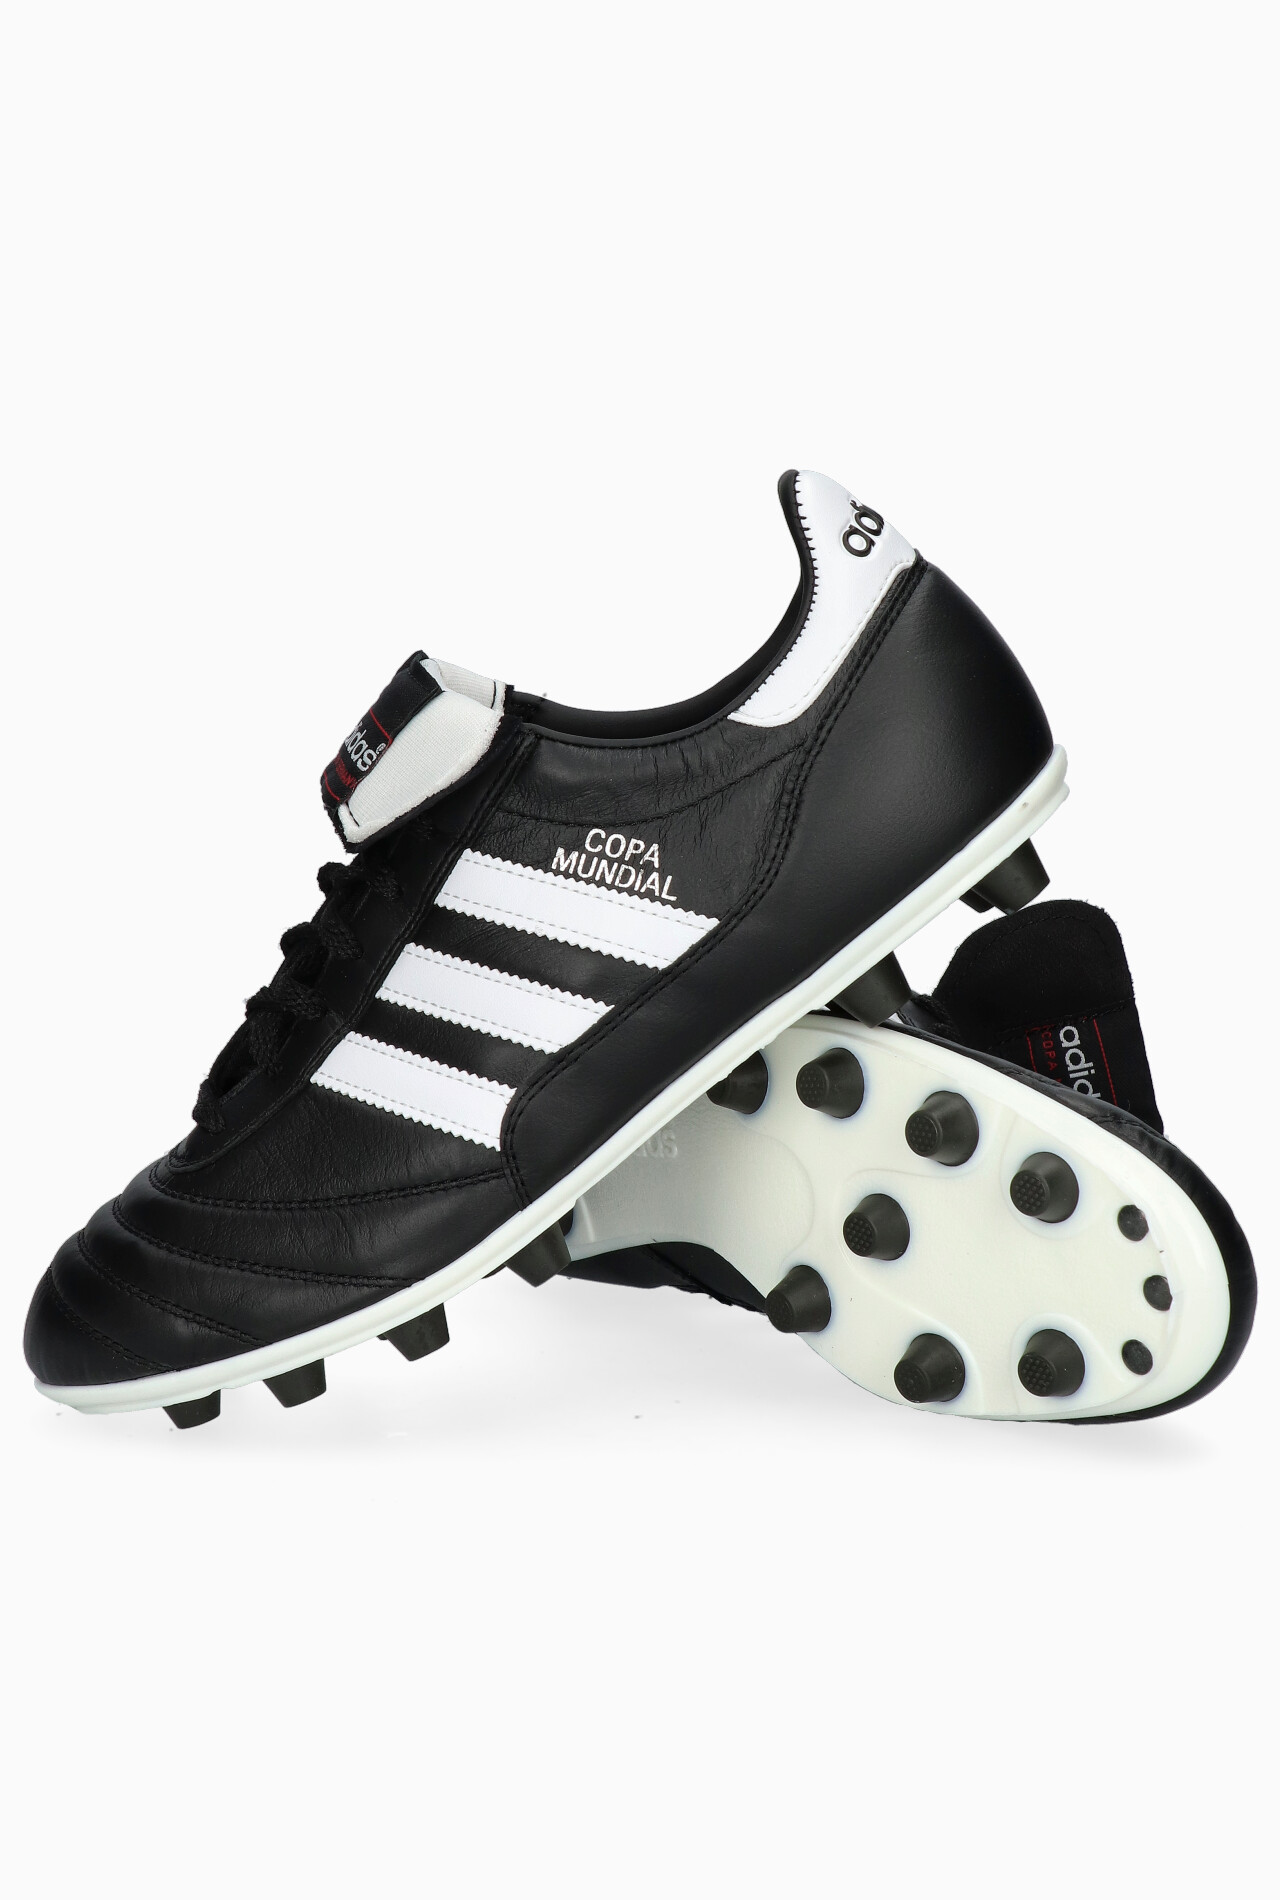 Cleats adidas Copa Mundial Boots - R-GOL.com - Football boots & equipment